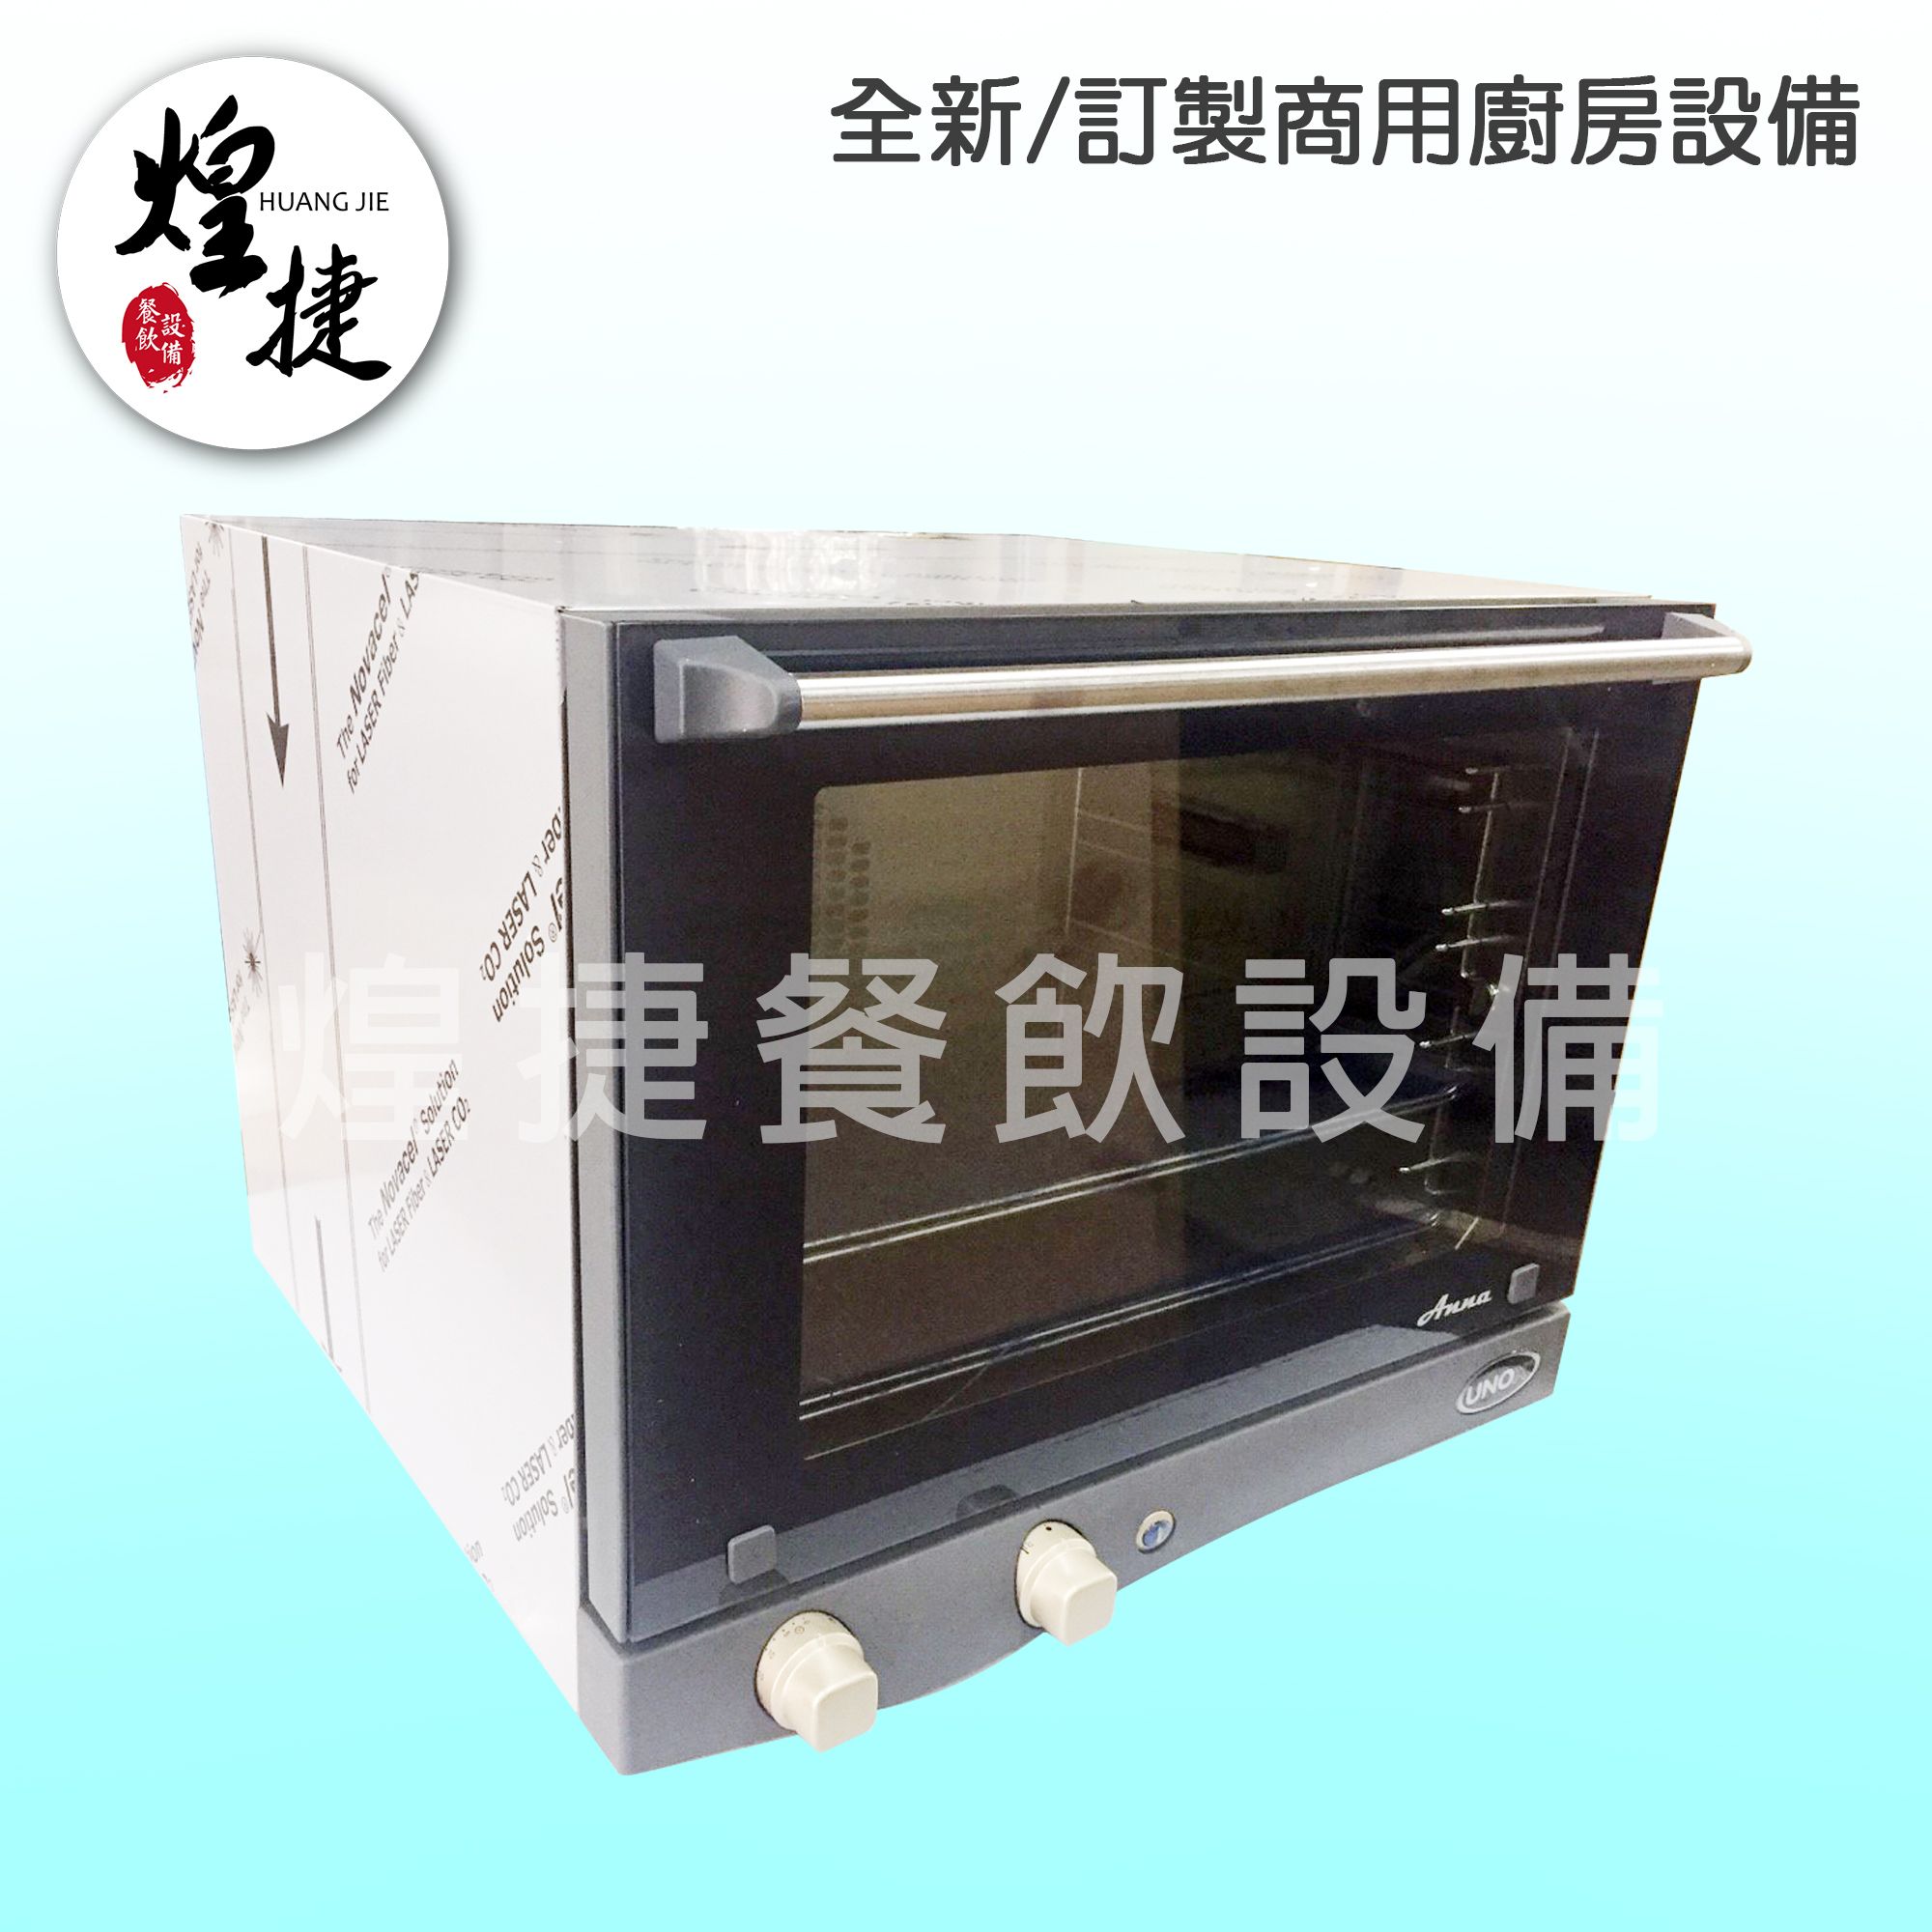 XF023旋風烤箱-2.jpg